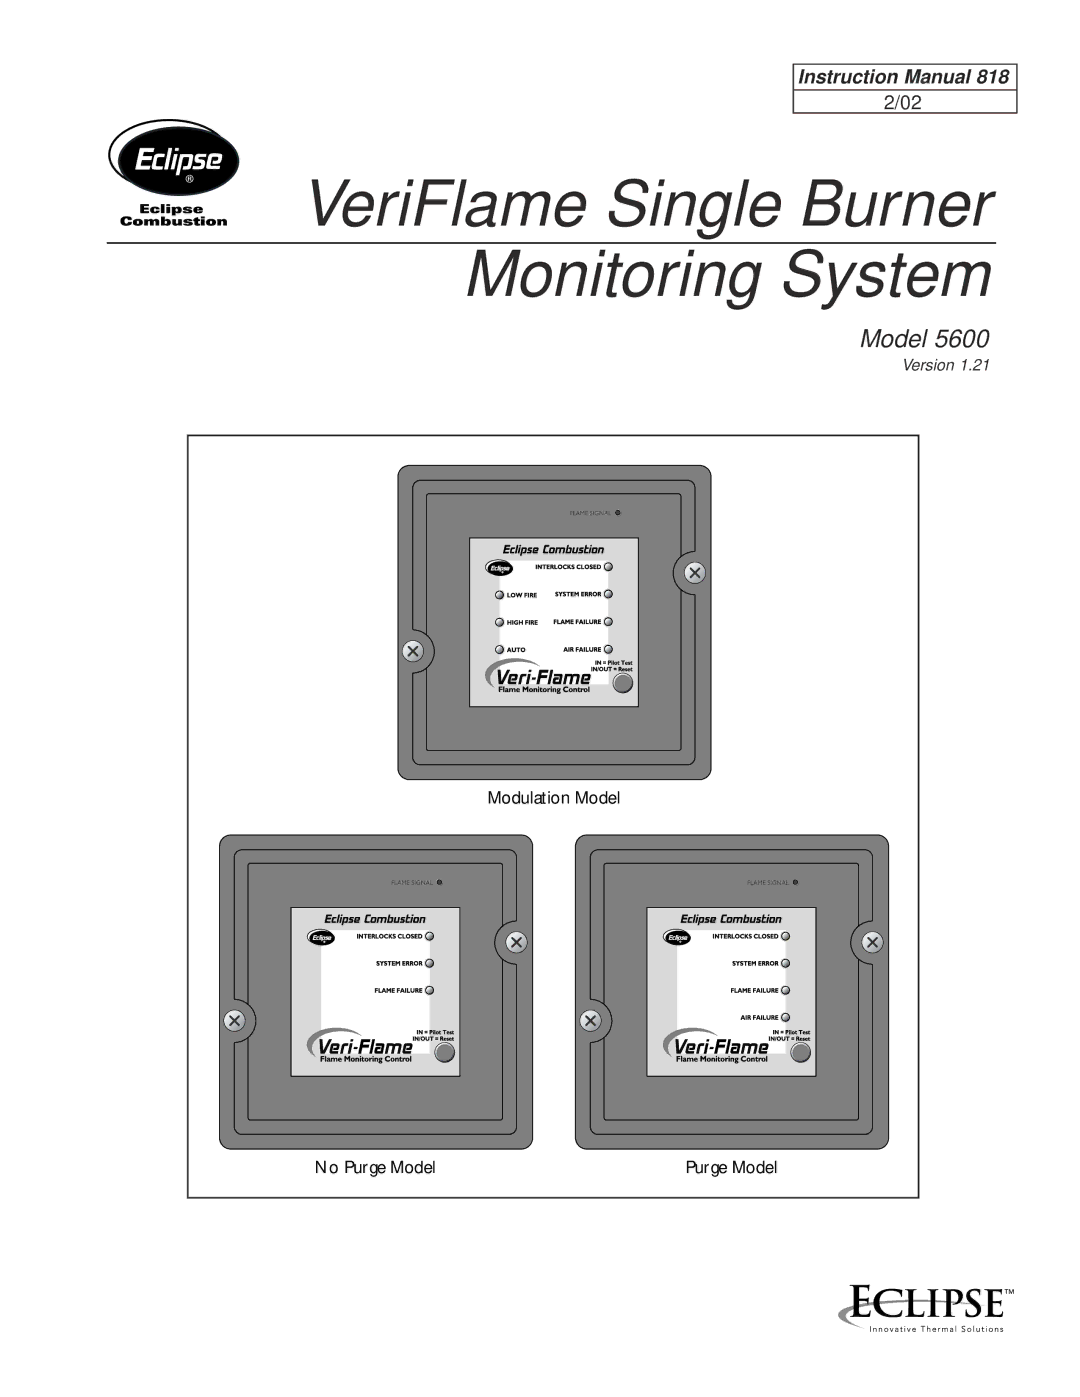 Eclipse Combustion VeriFlame Single Burner Monitoring System, 5600 instruction manual 